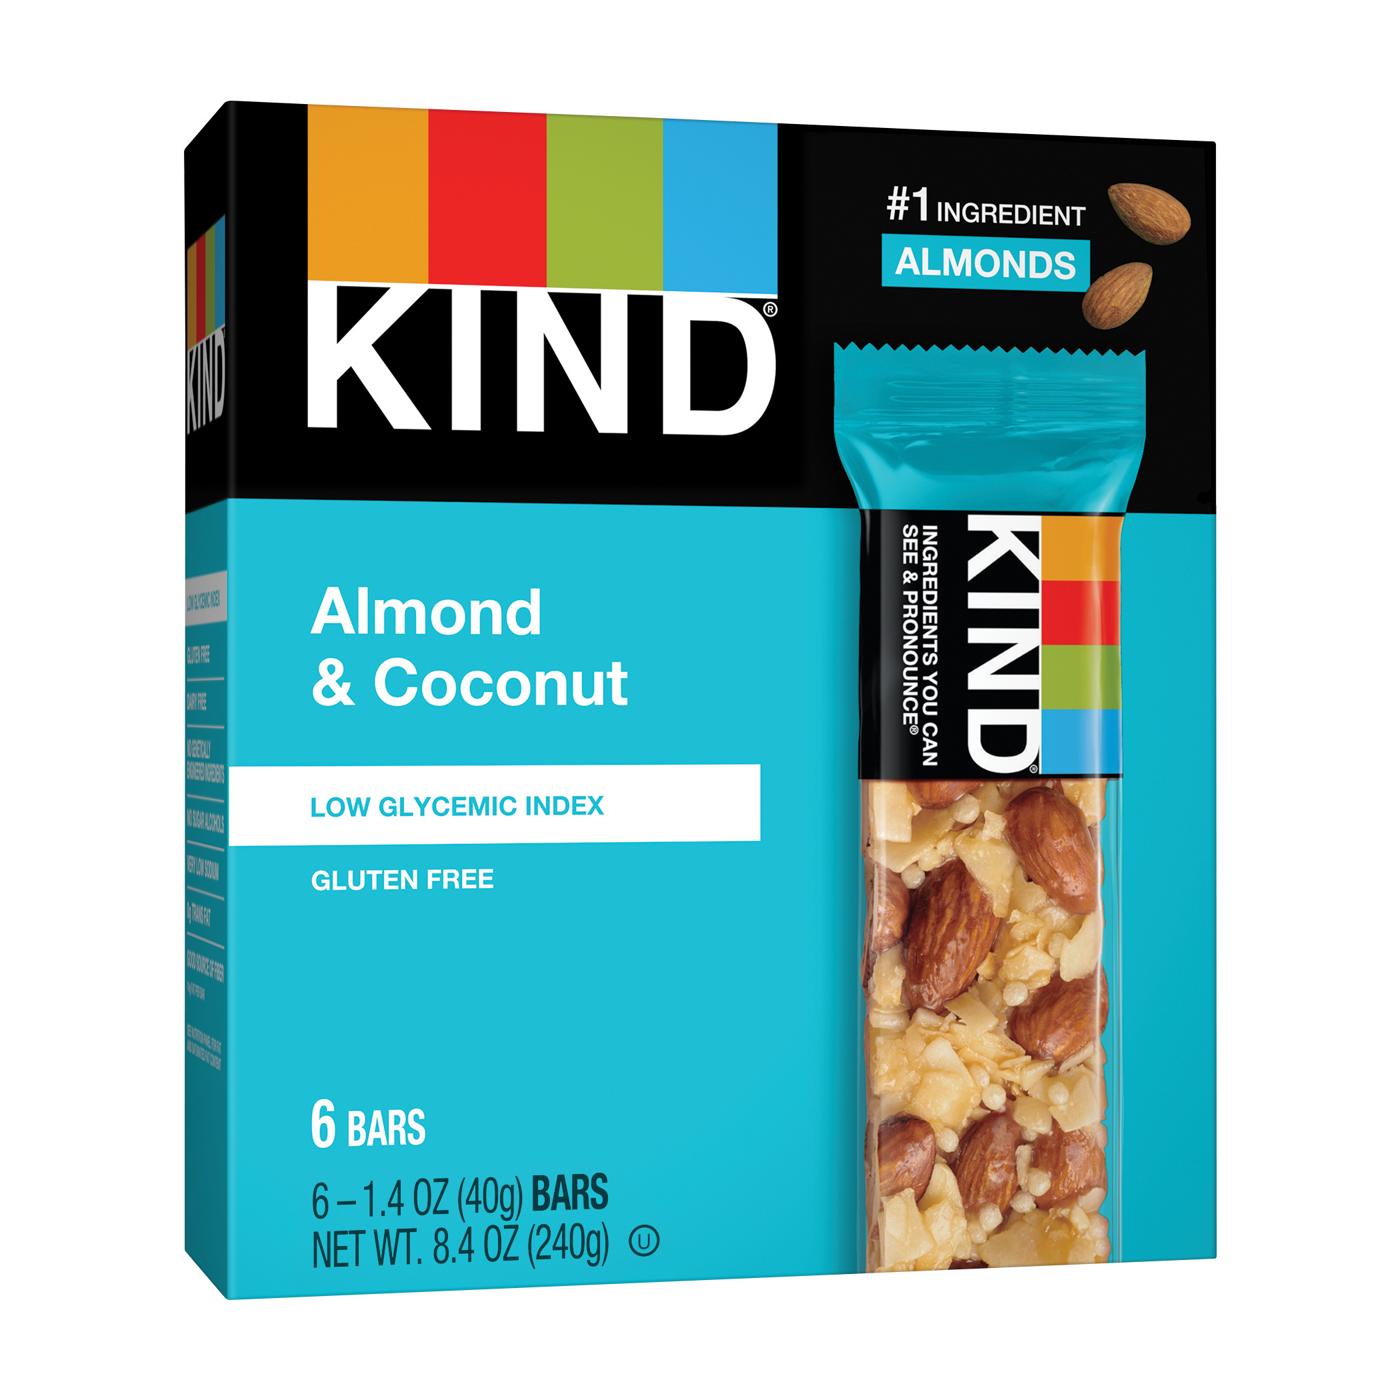 Kind Almond & Coconut Bars; image 1 of 2